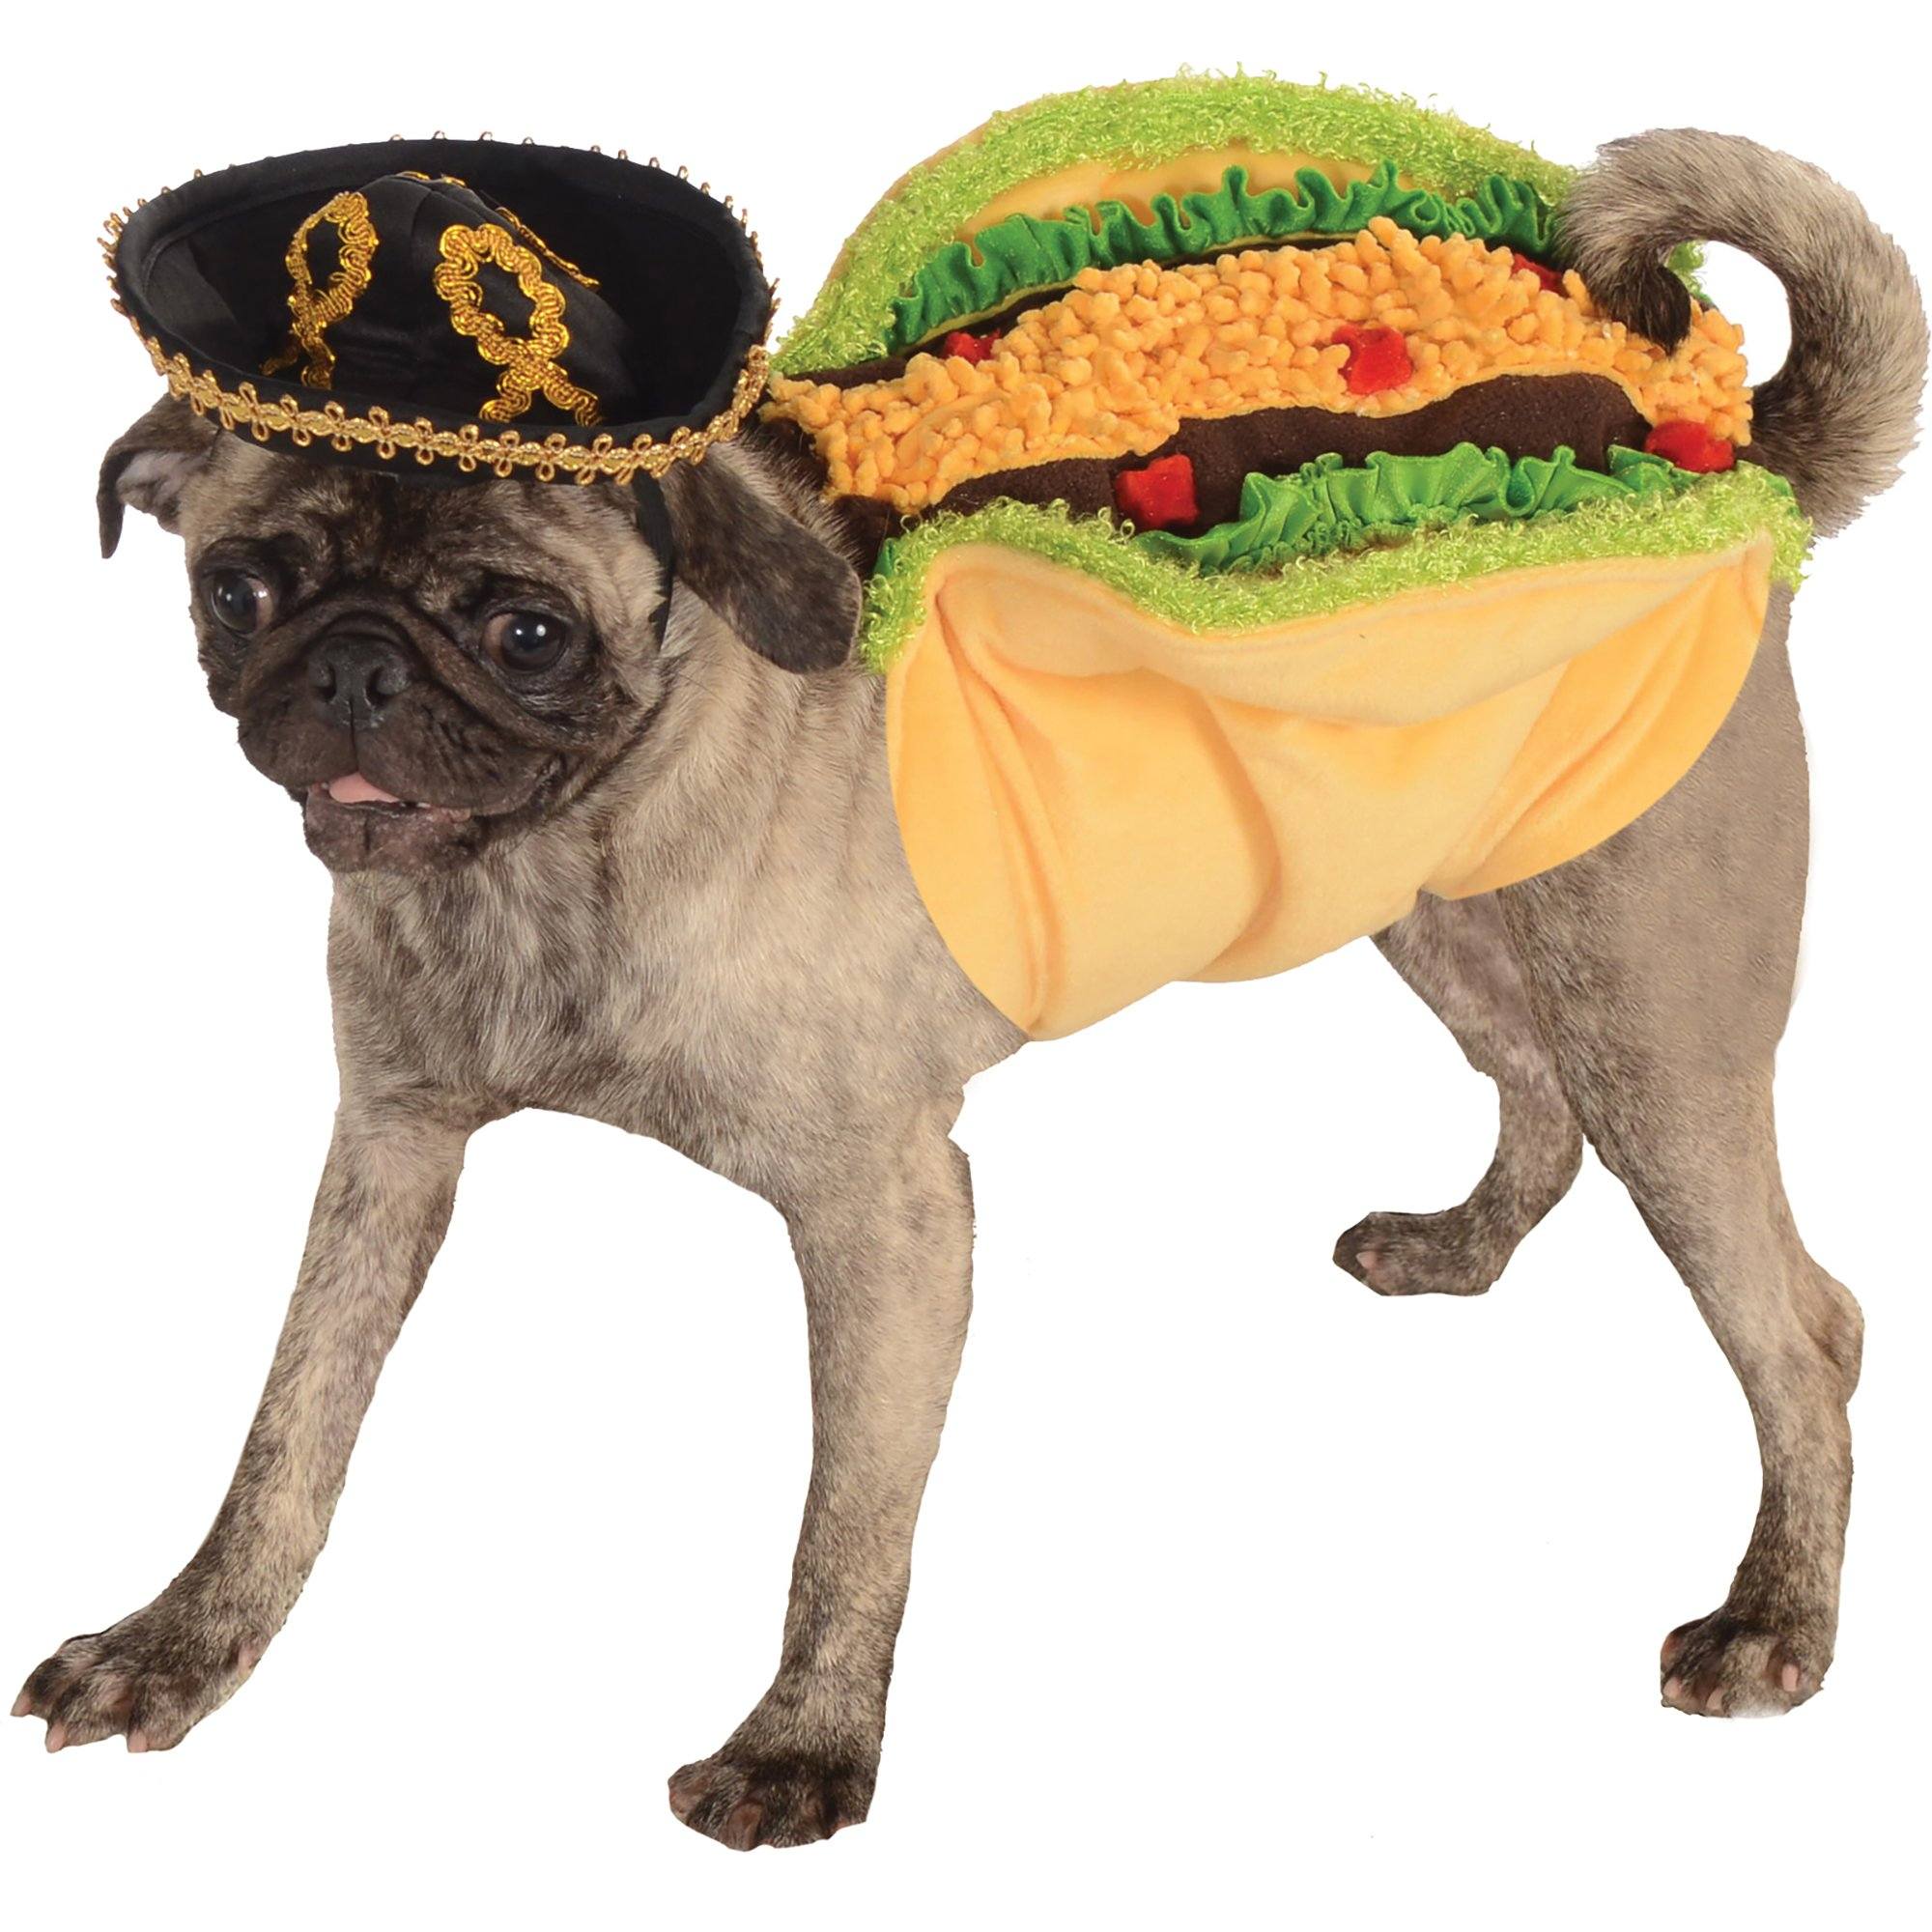 Taco Pet Costume - L